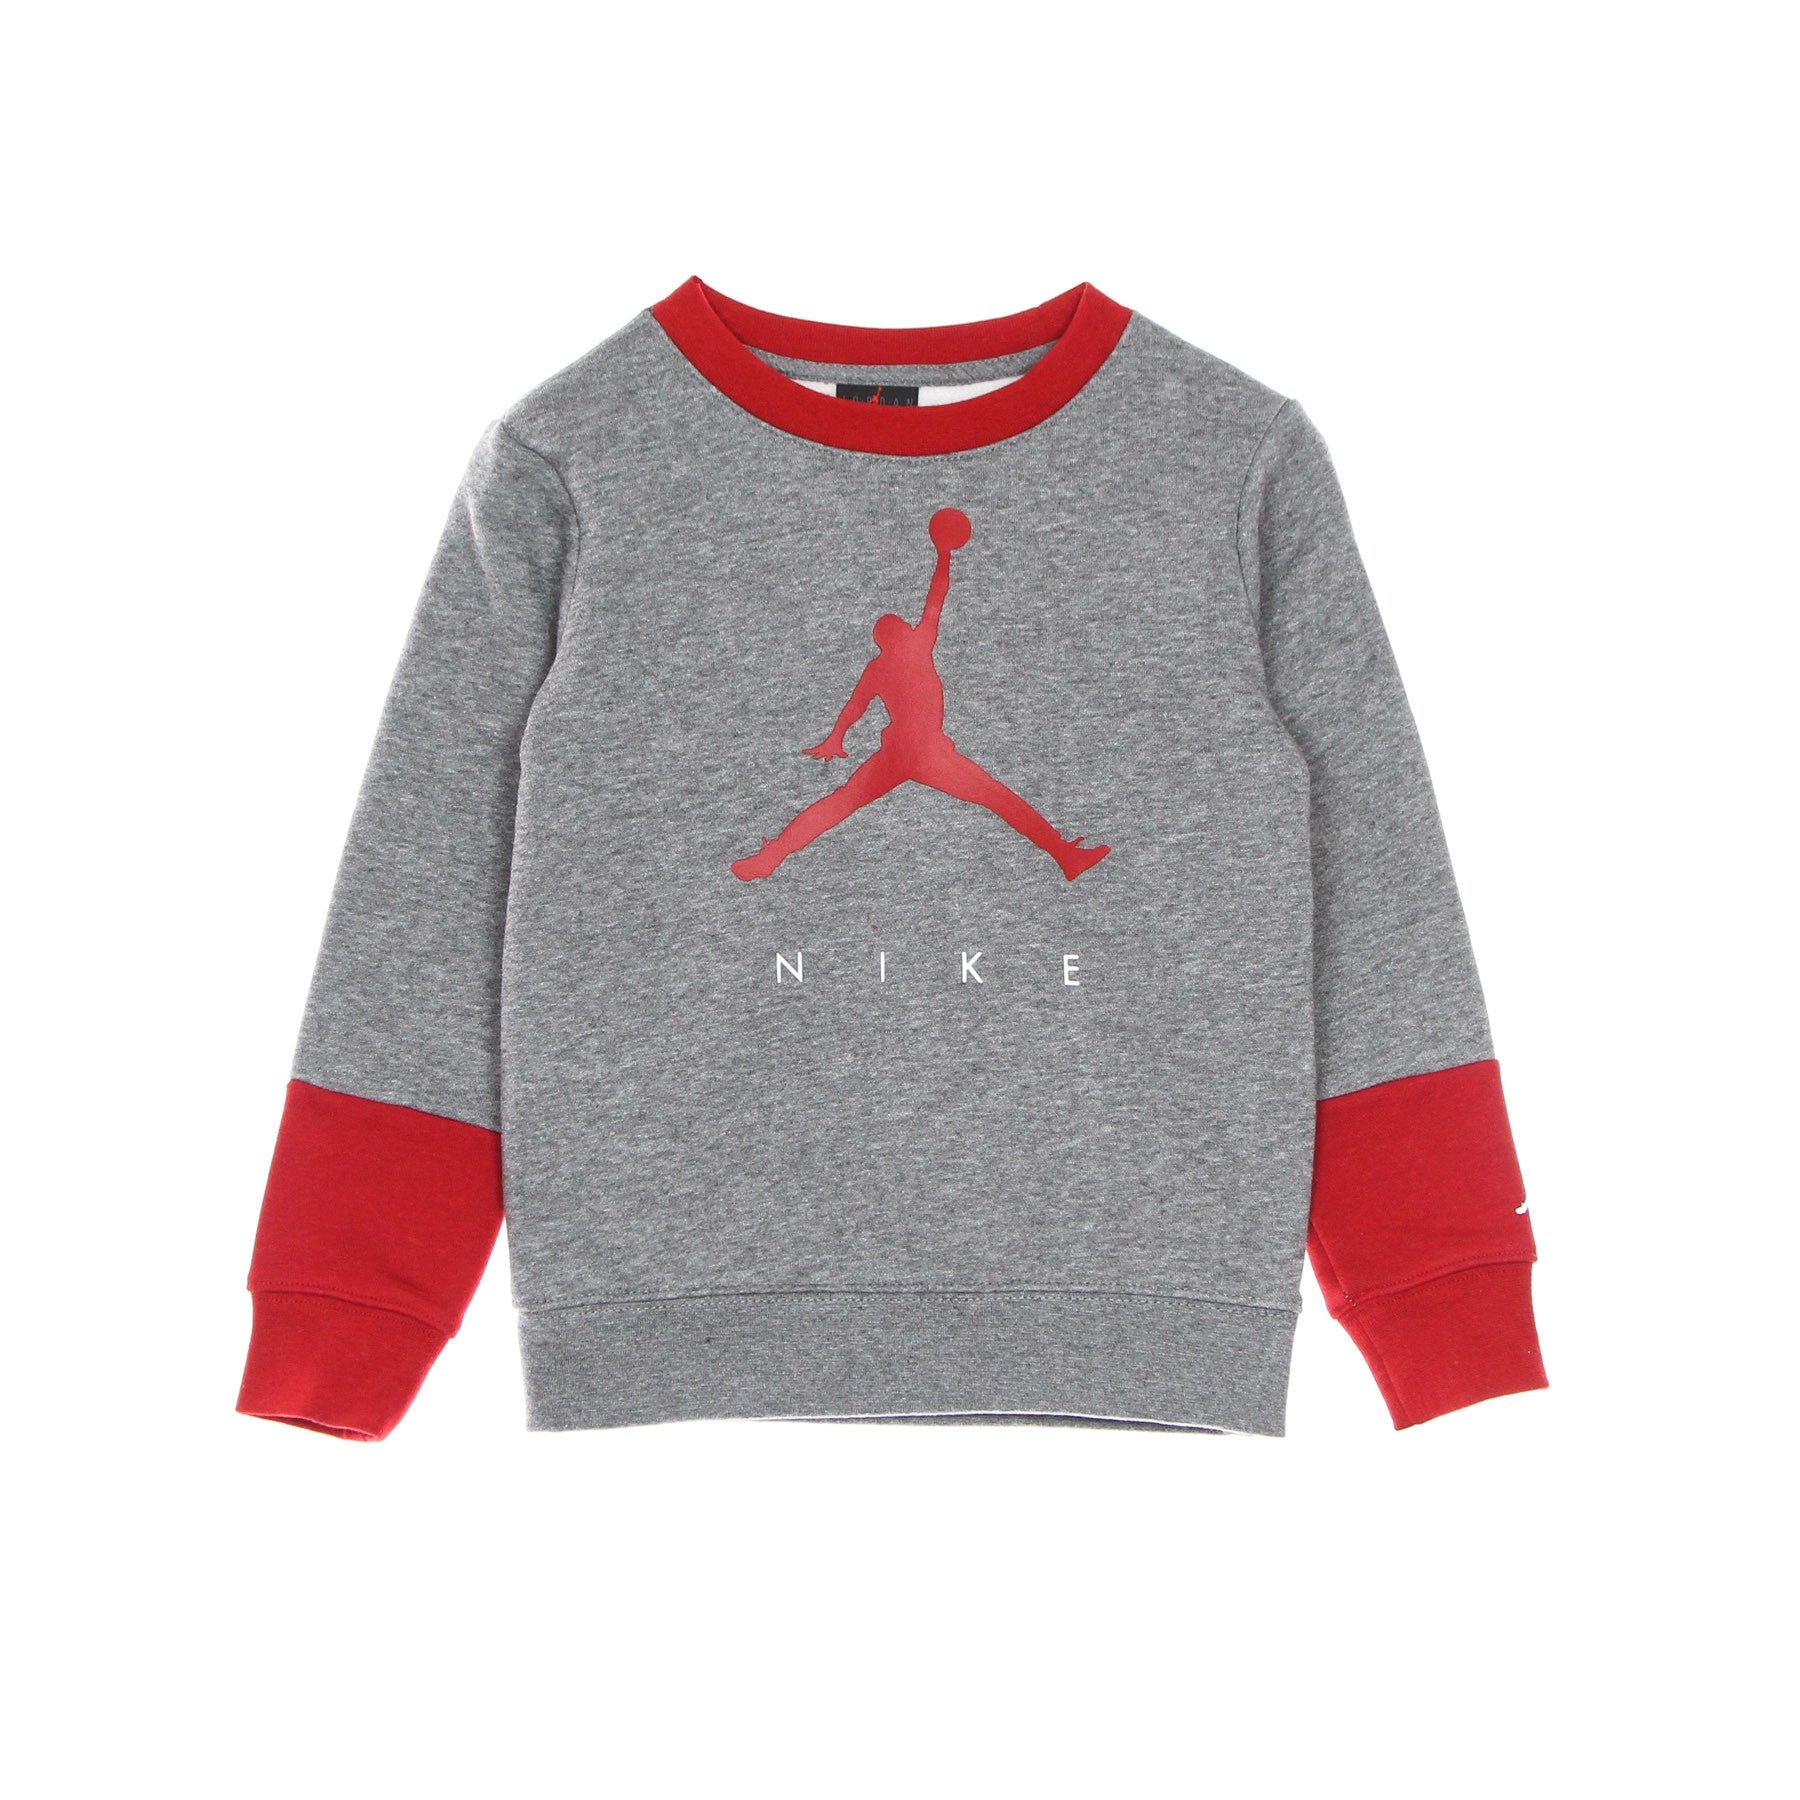 Jordan, Completo Tuta Bambino Jumpman By Nike Crew Set, 